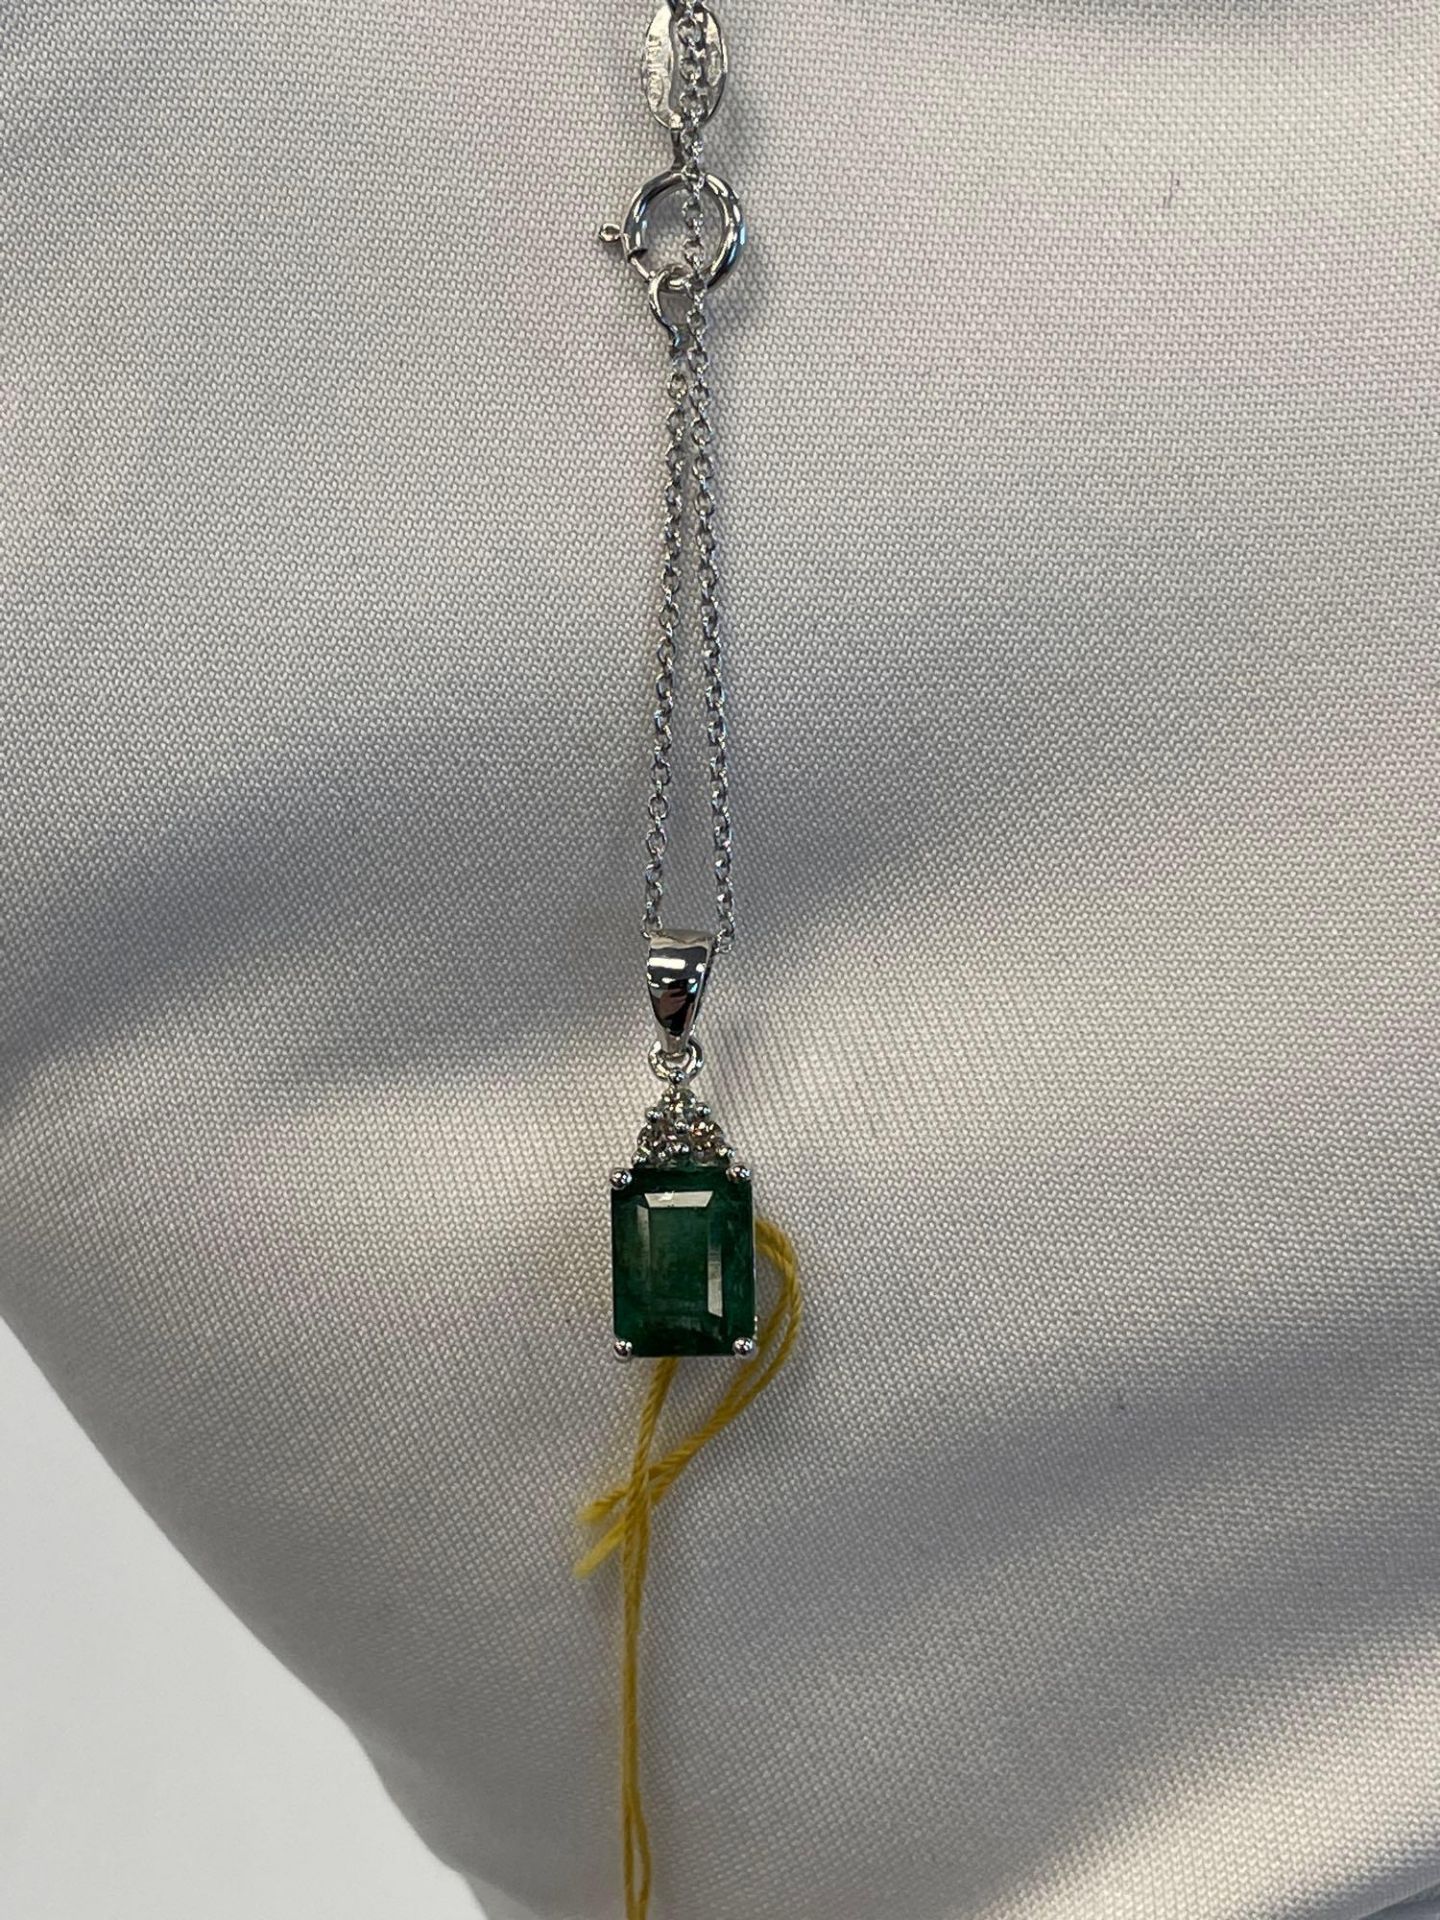 Jewelry; Emerald Beryl 1 ctw earrings & Emerald Beryl 1.63 ctw Necklace - Image 7 of 7